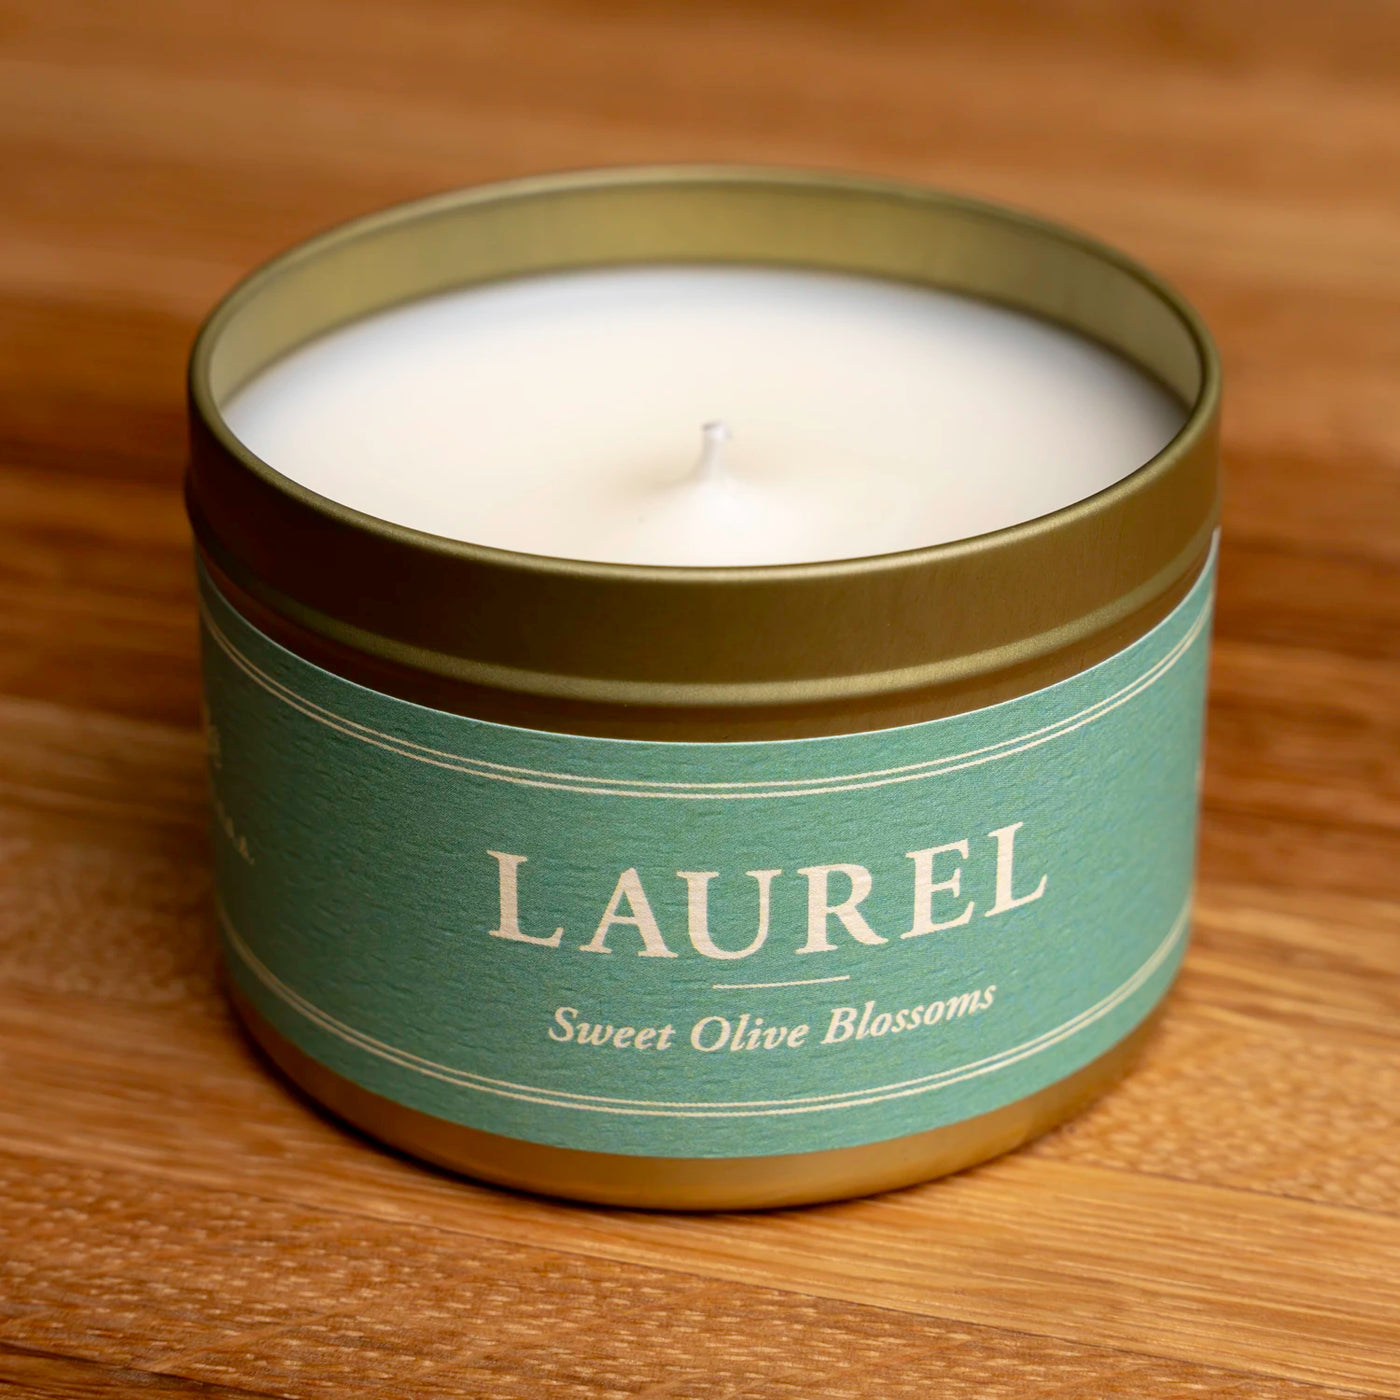 Laurel 5 oz. Candle